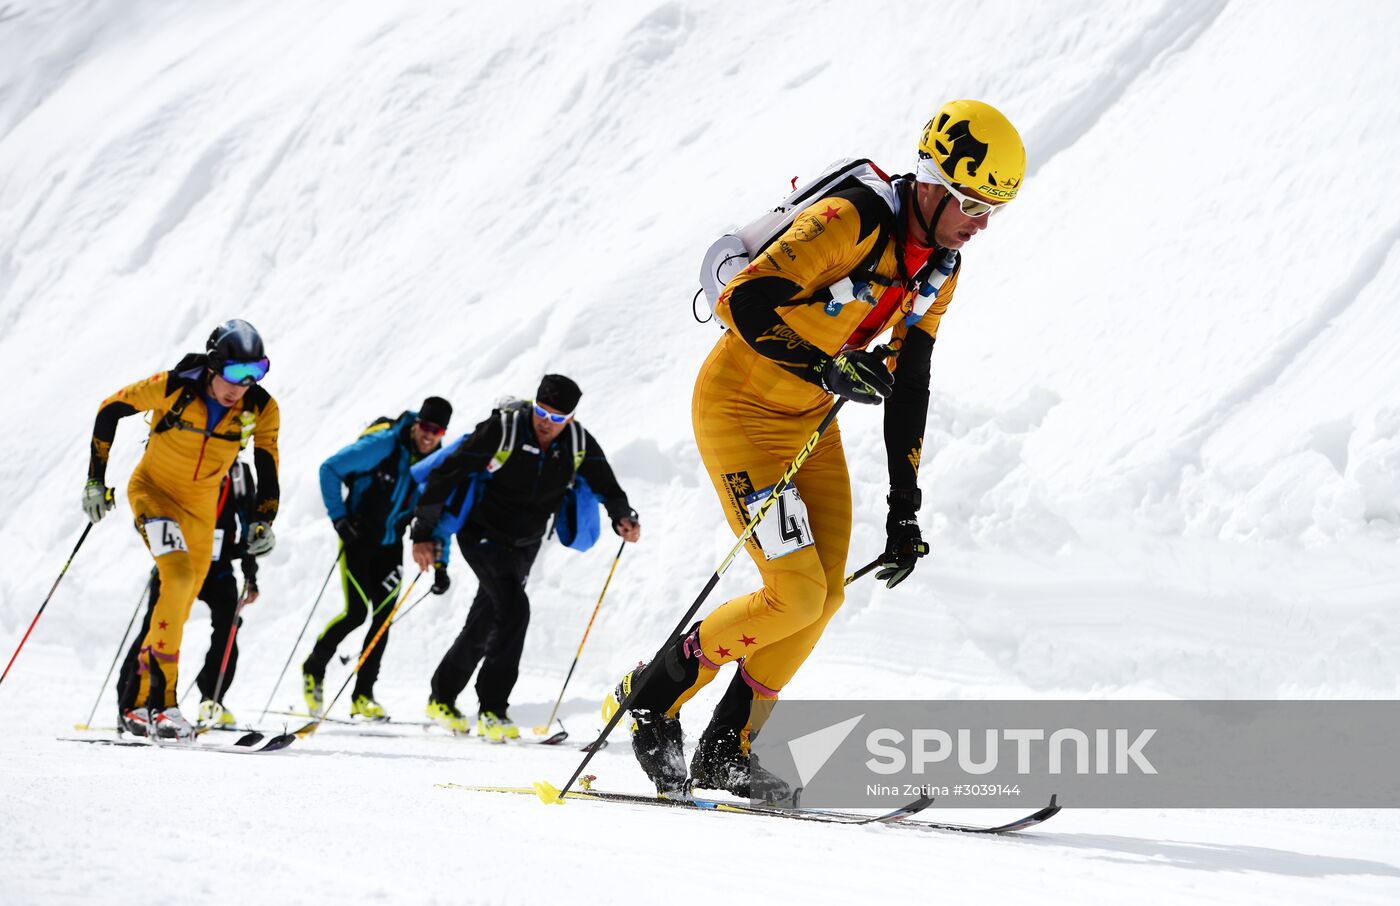 3rd CISM World Military Winter Games. Ski mountaineering. Men's team race